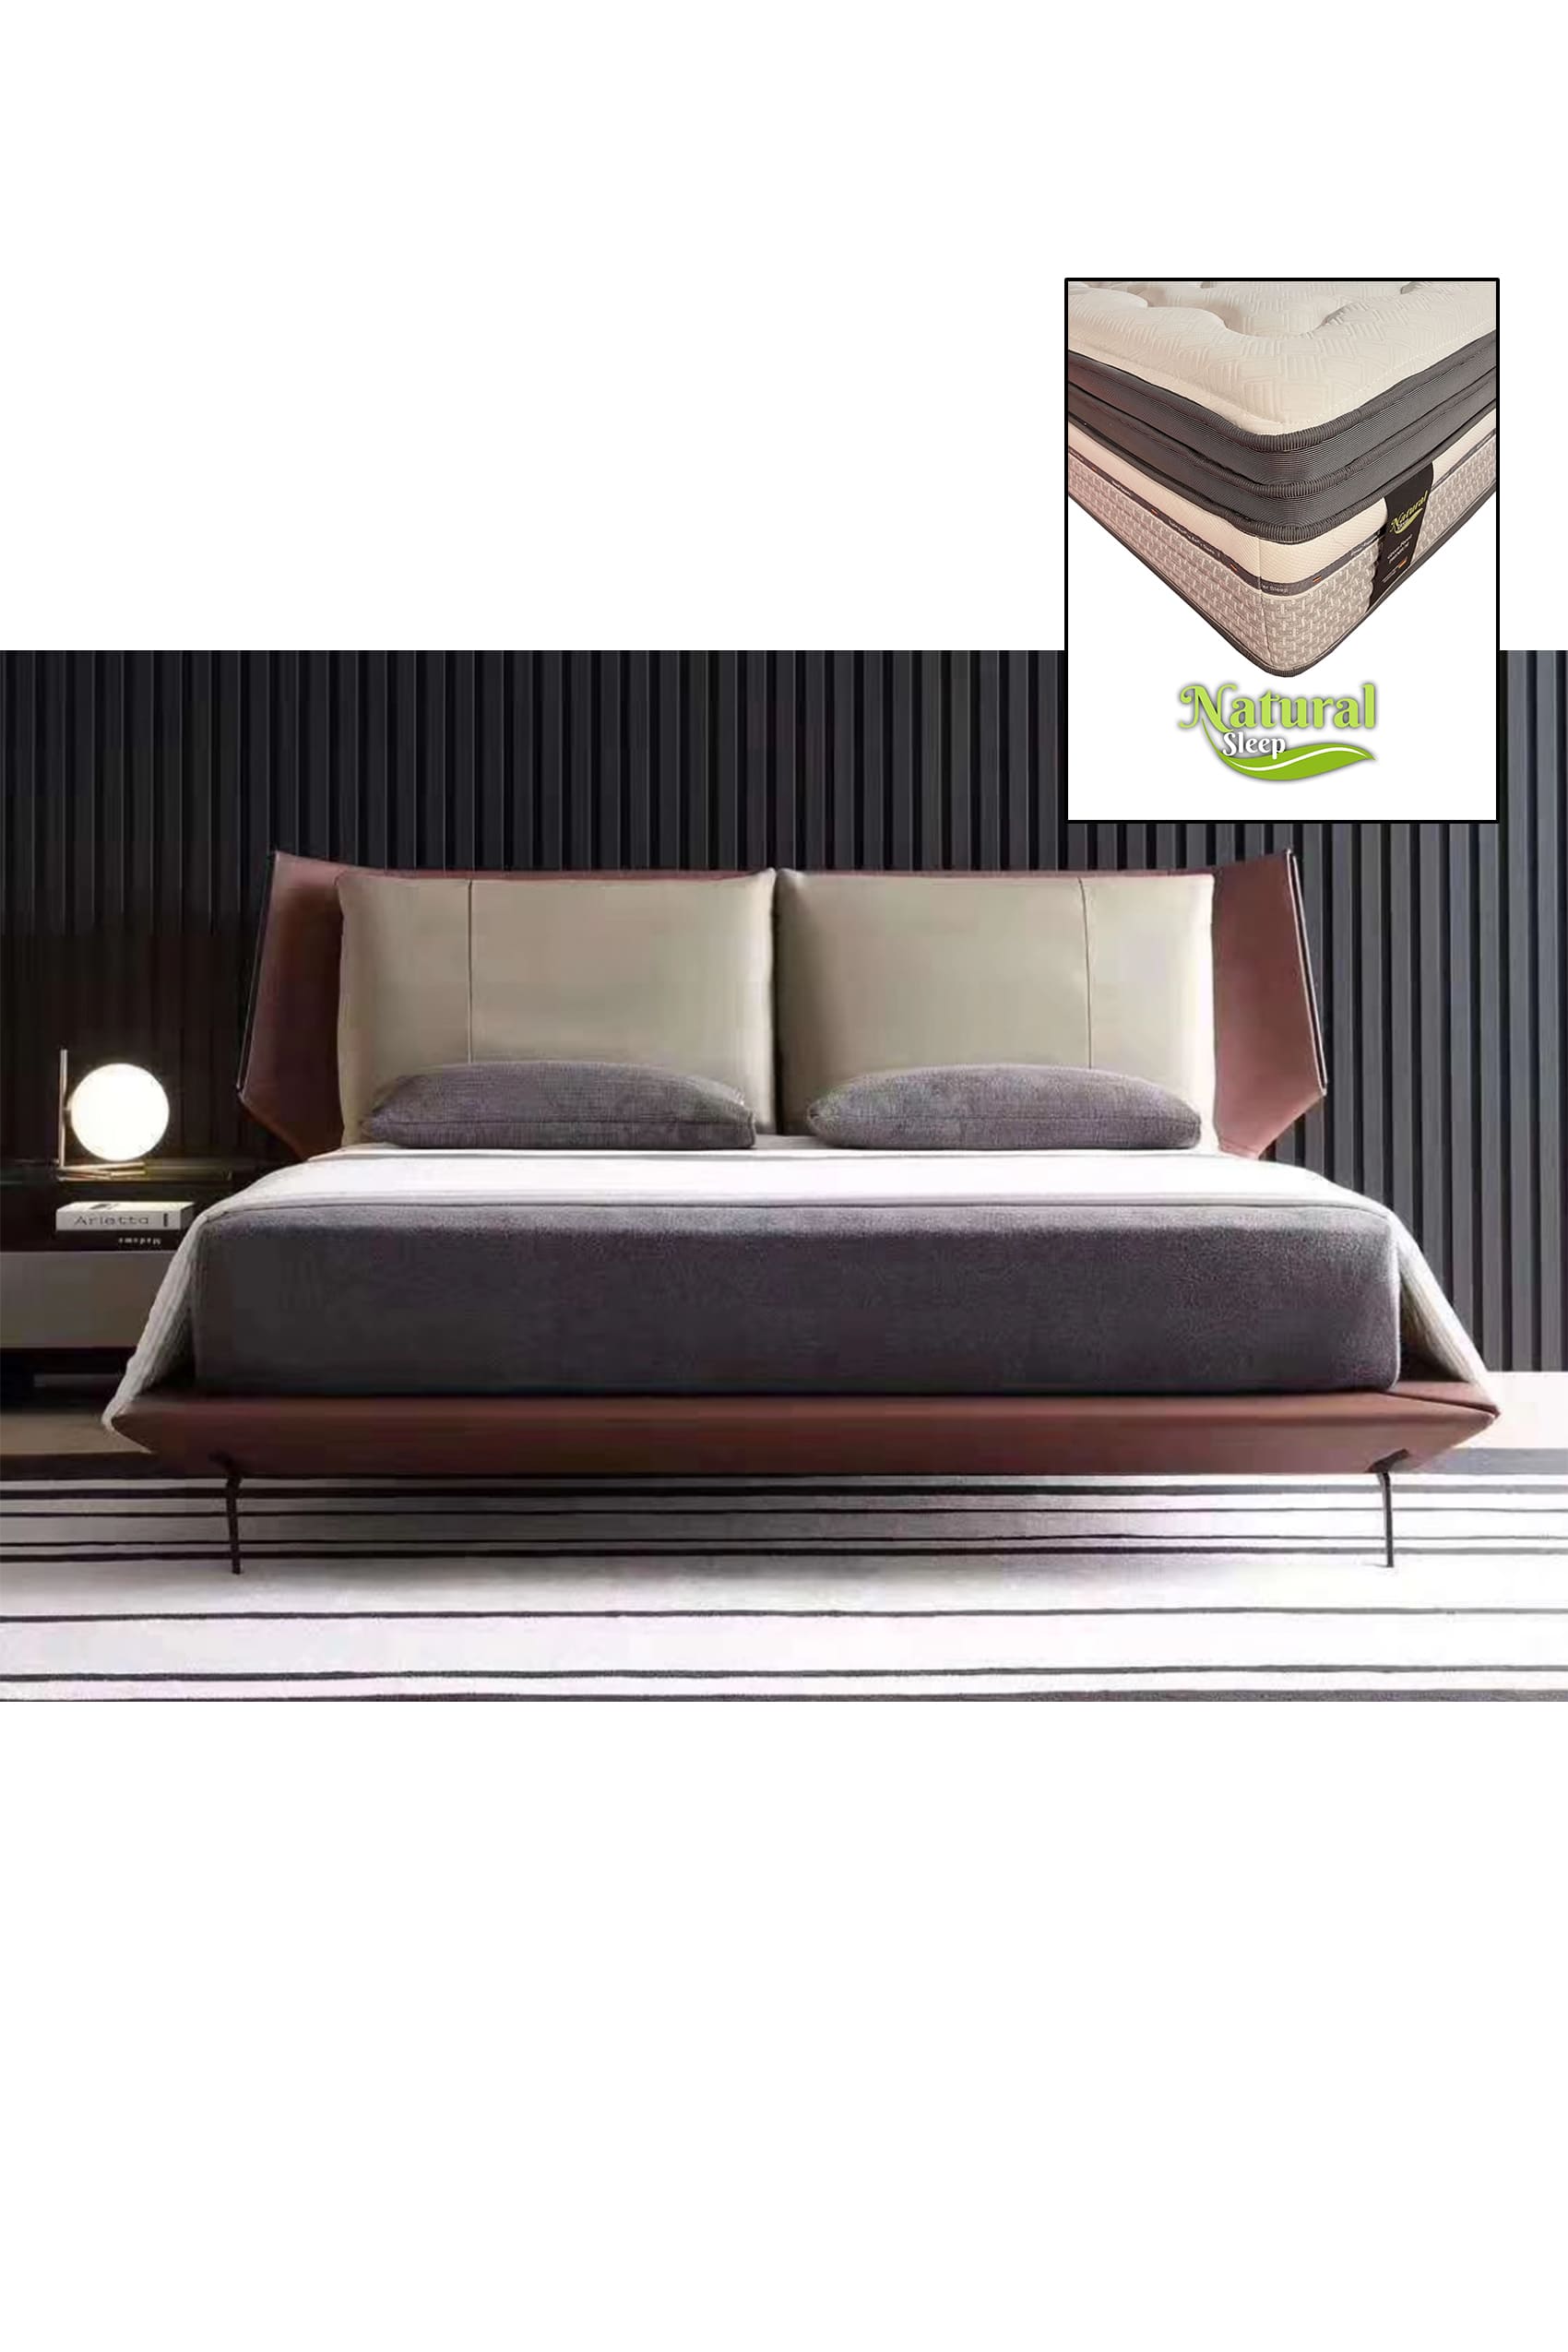 Oriana Designer Bed Frame + Natural Sleep (T5-Green Forest)